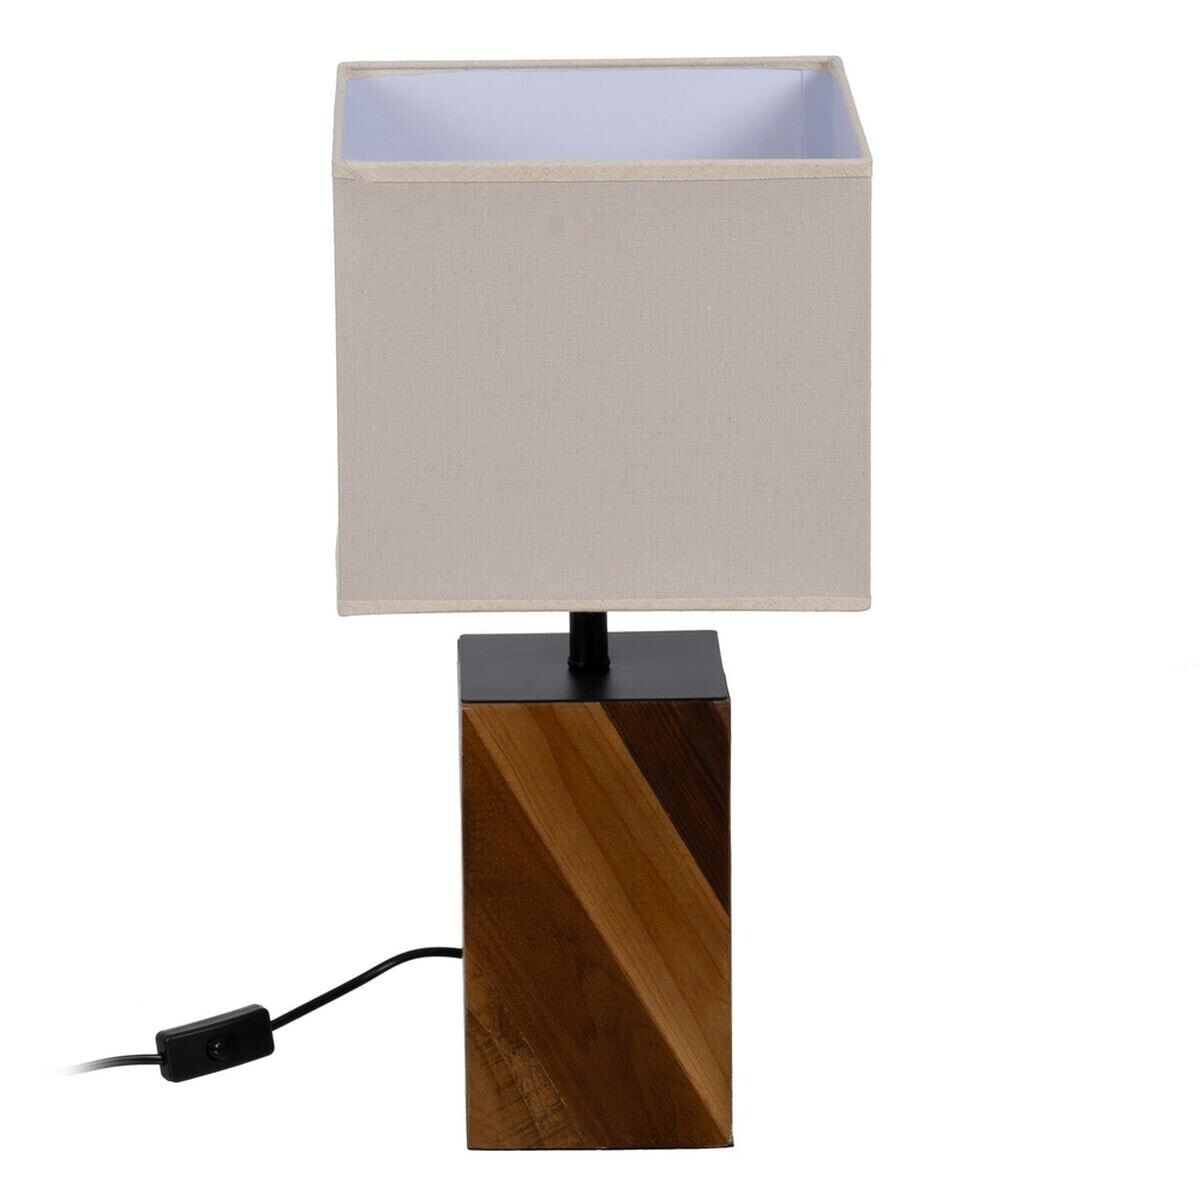 Desk lamp Brown Cream 60 W 220-240 V 25 x 25 x 51 cm